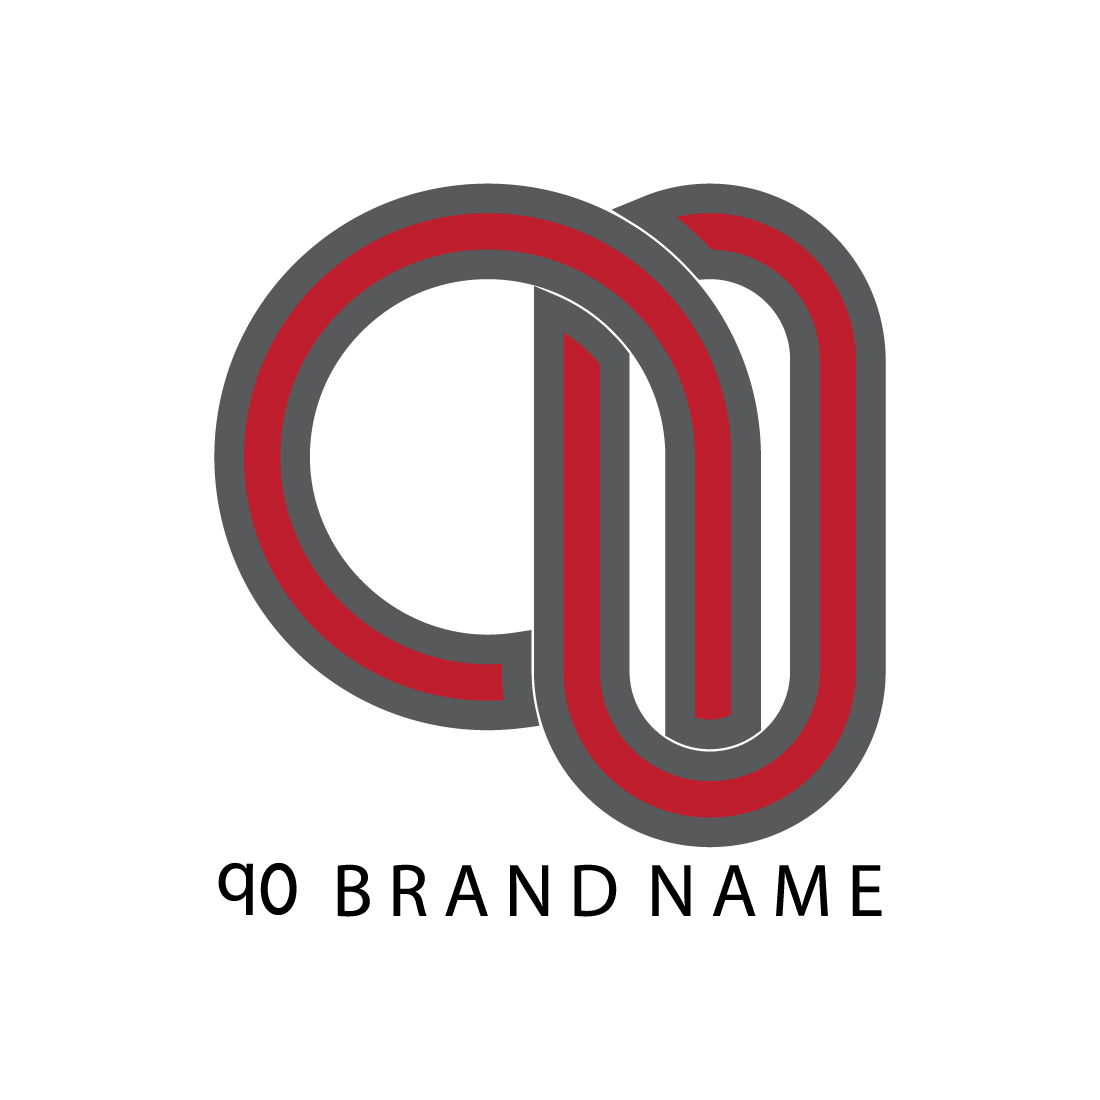 Initials QO letters logo design vector images design OQ logo red and black color royalty QO logo design company template illustration preview image.